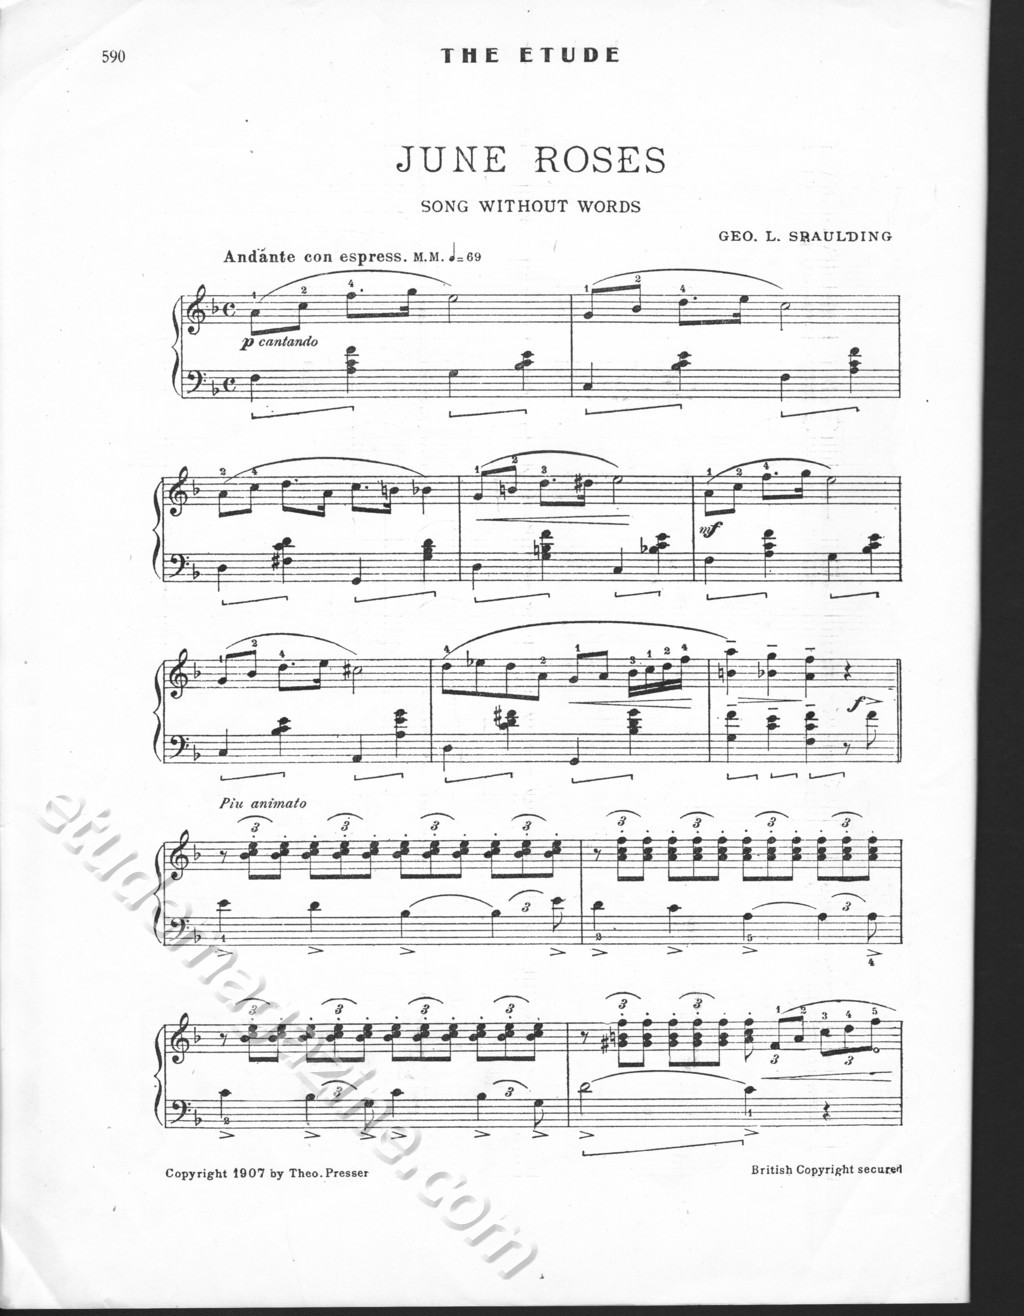 June Roses. Geo. L. Spaulding.